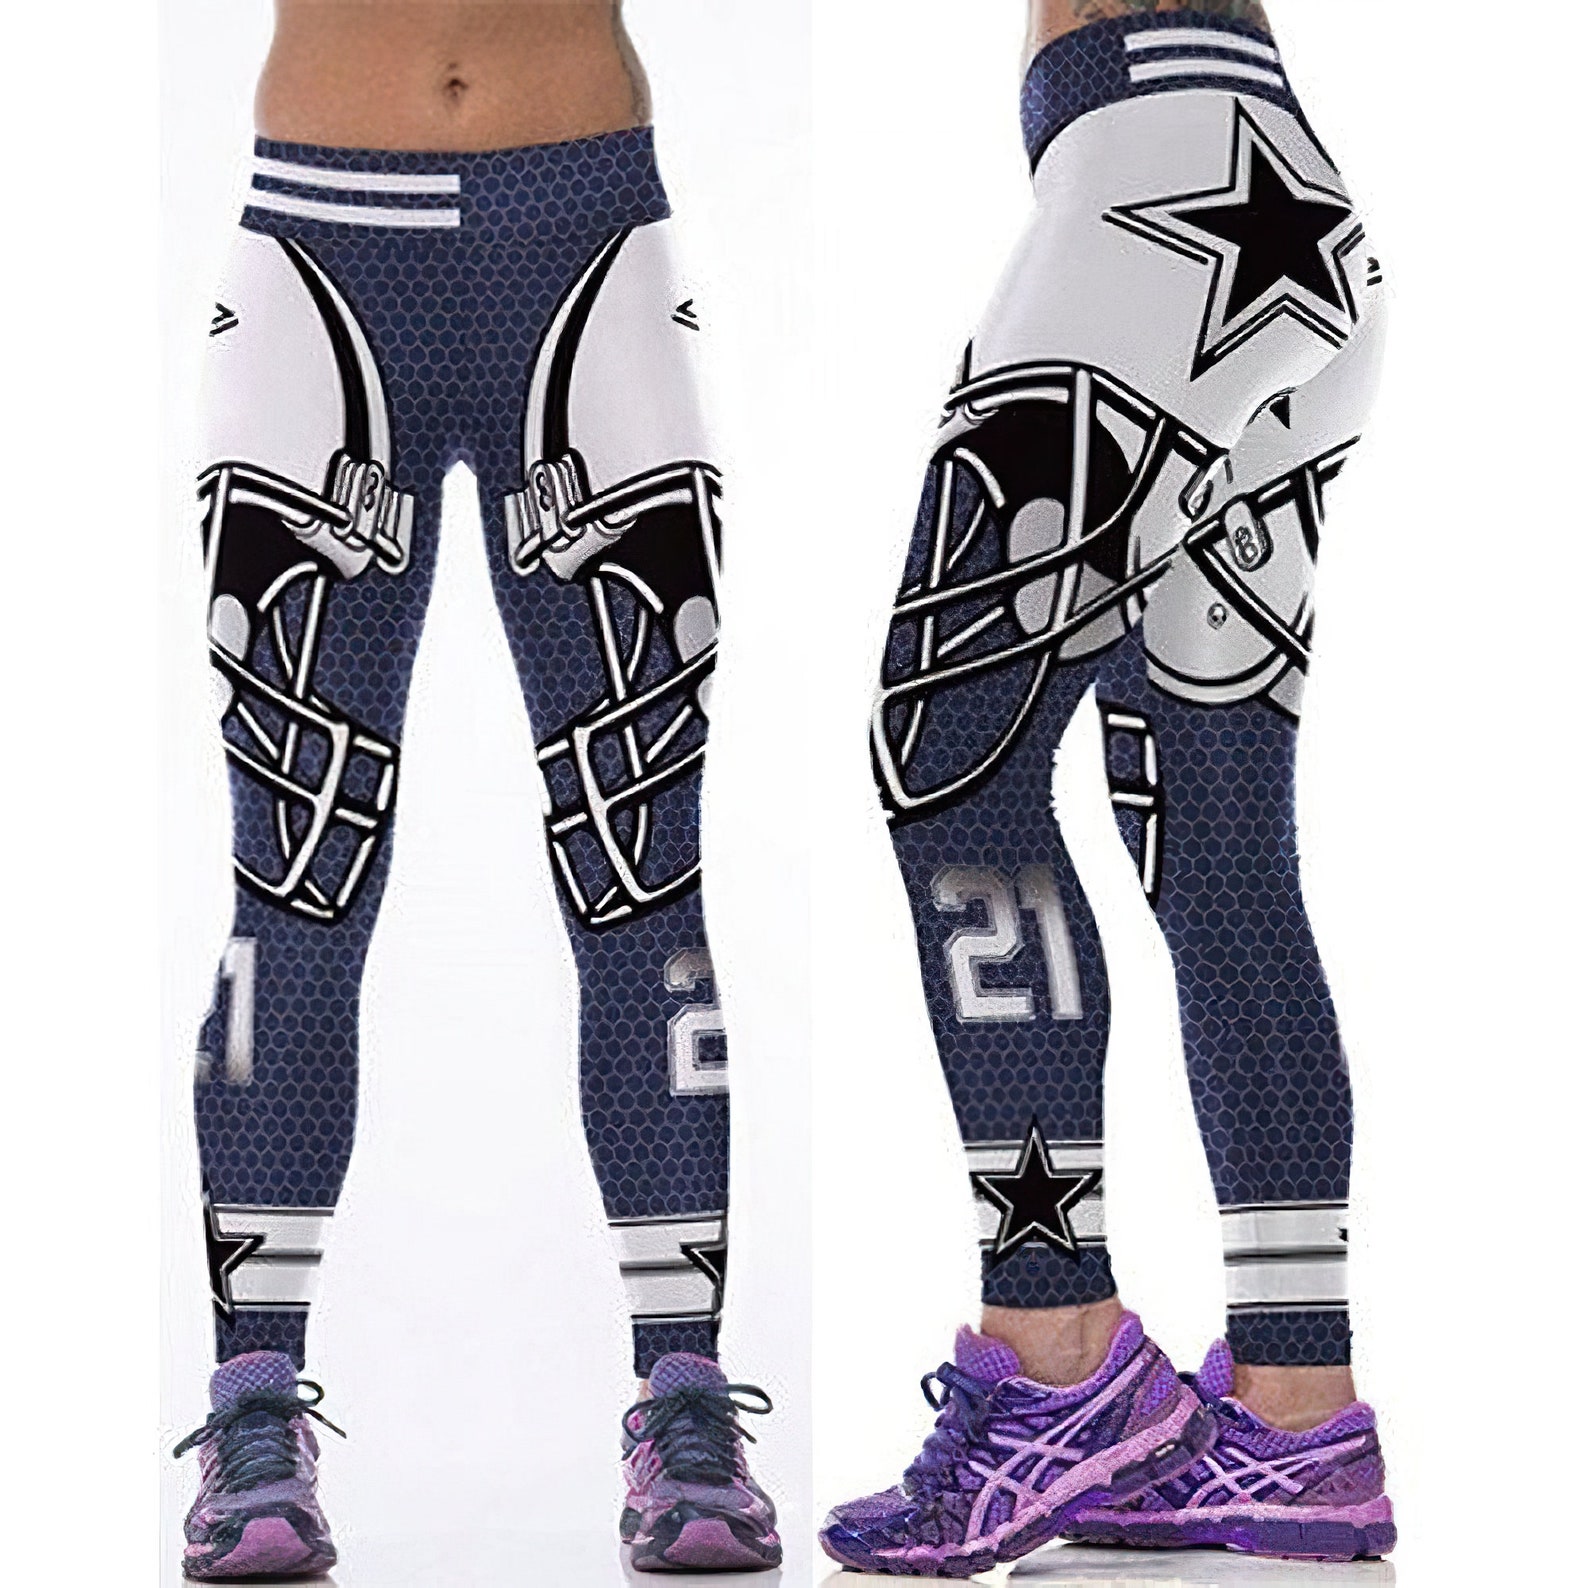 Dallas Cowboys NFL women's leggings Well designed high | Etsy